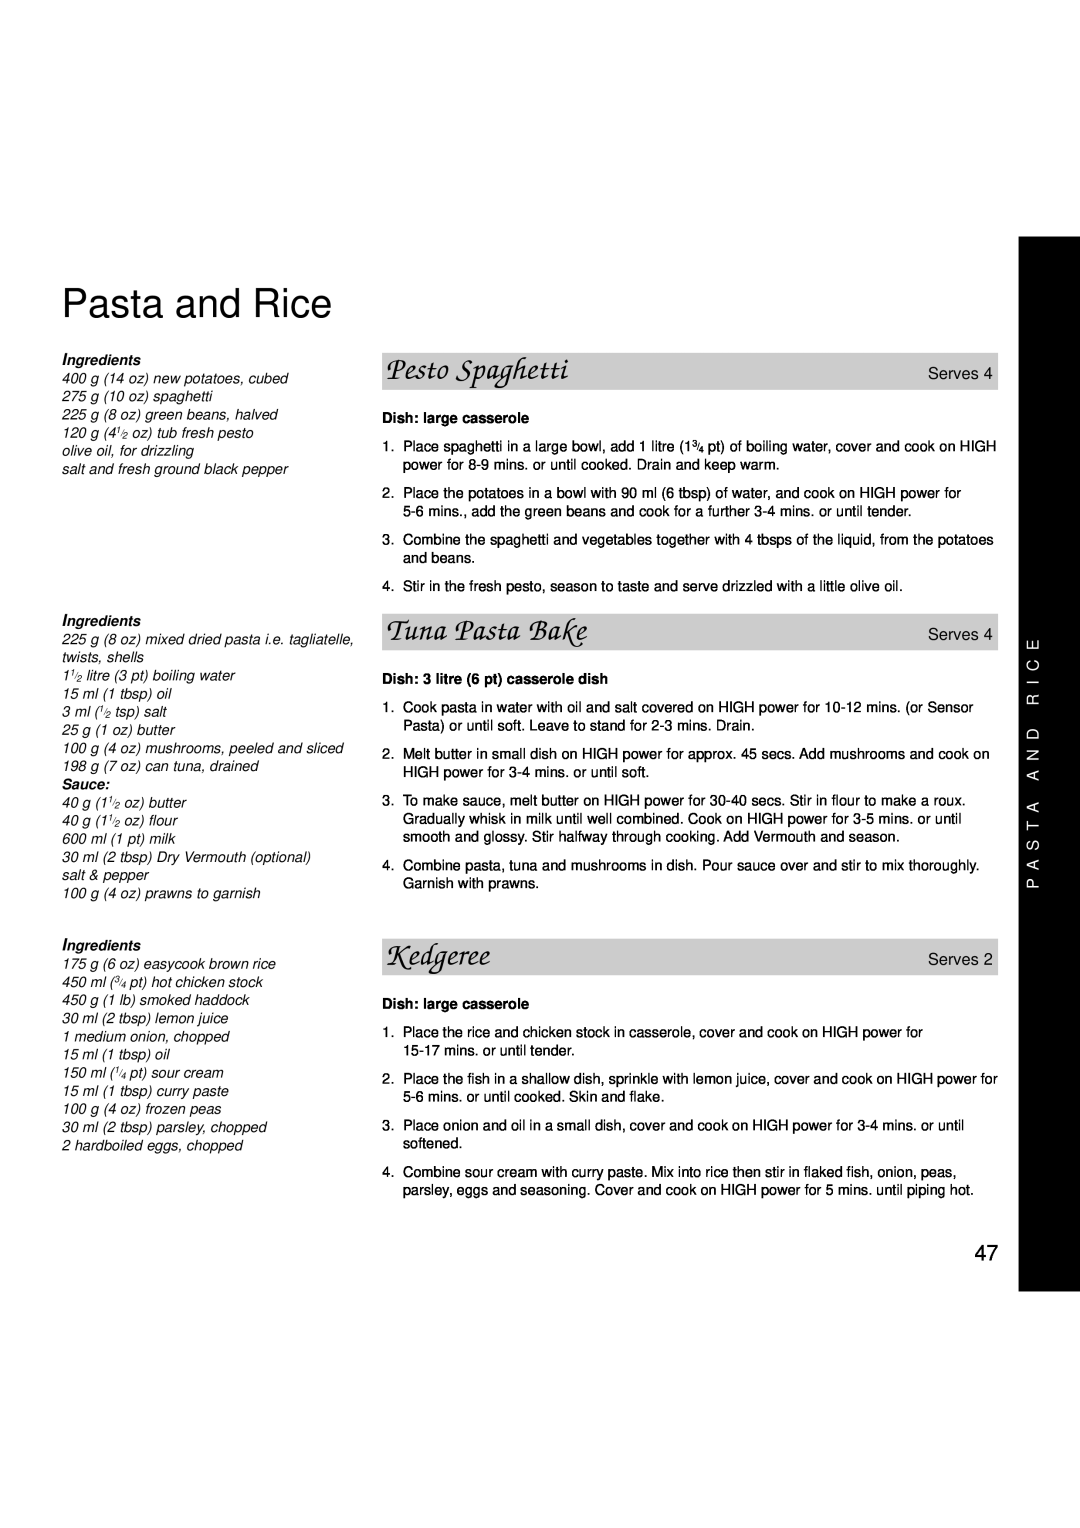 Creda MBO55 manual Pasta and Rice, Pesto Spaghetti, Tuna Pasta Bake, Kedgeree, P A S T A A N D R I C E, Ingredients, Sauce 